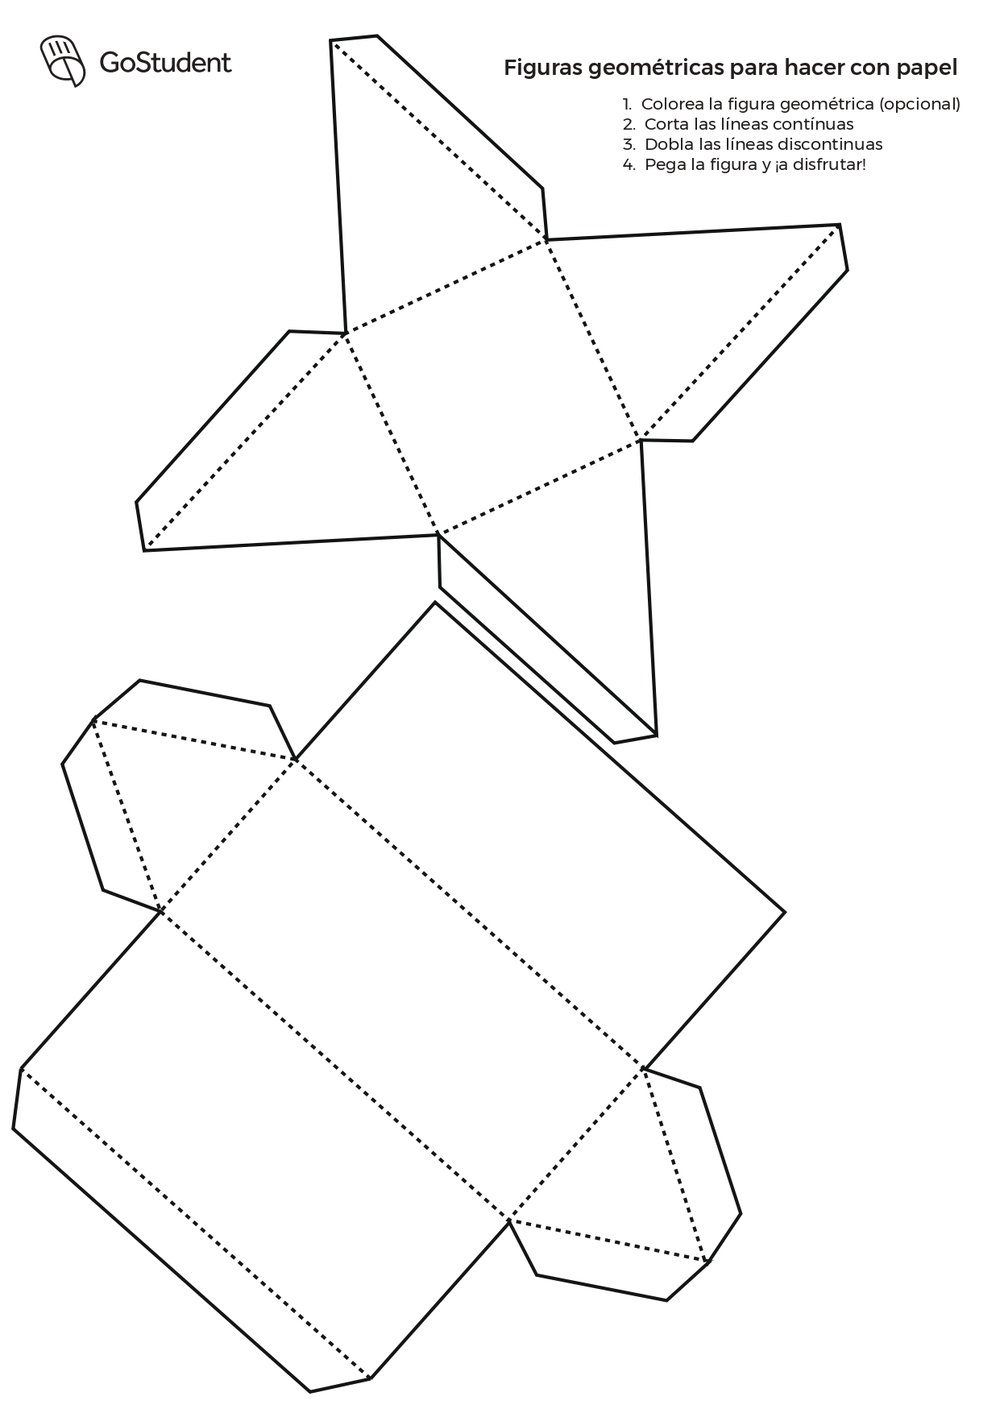 Figuras En 3d En Papel PDF: Cómo hacer figuras geométricas de papel en 3D | GoStudent